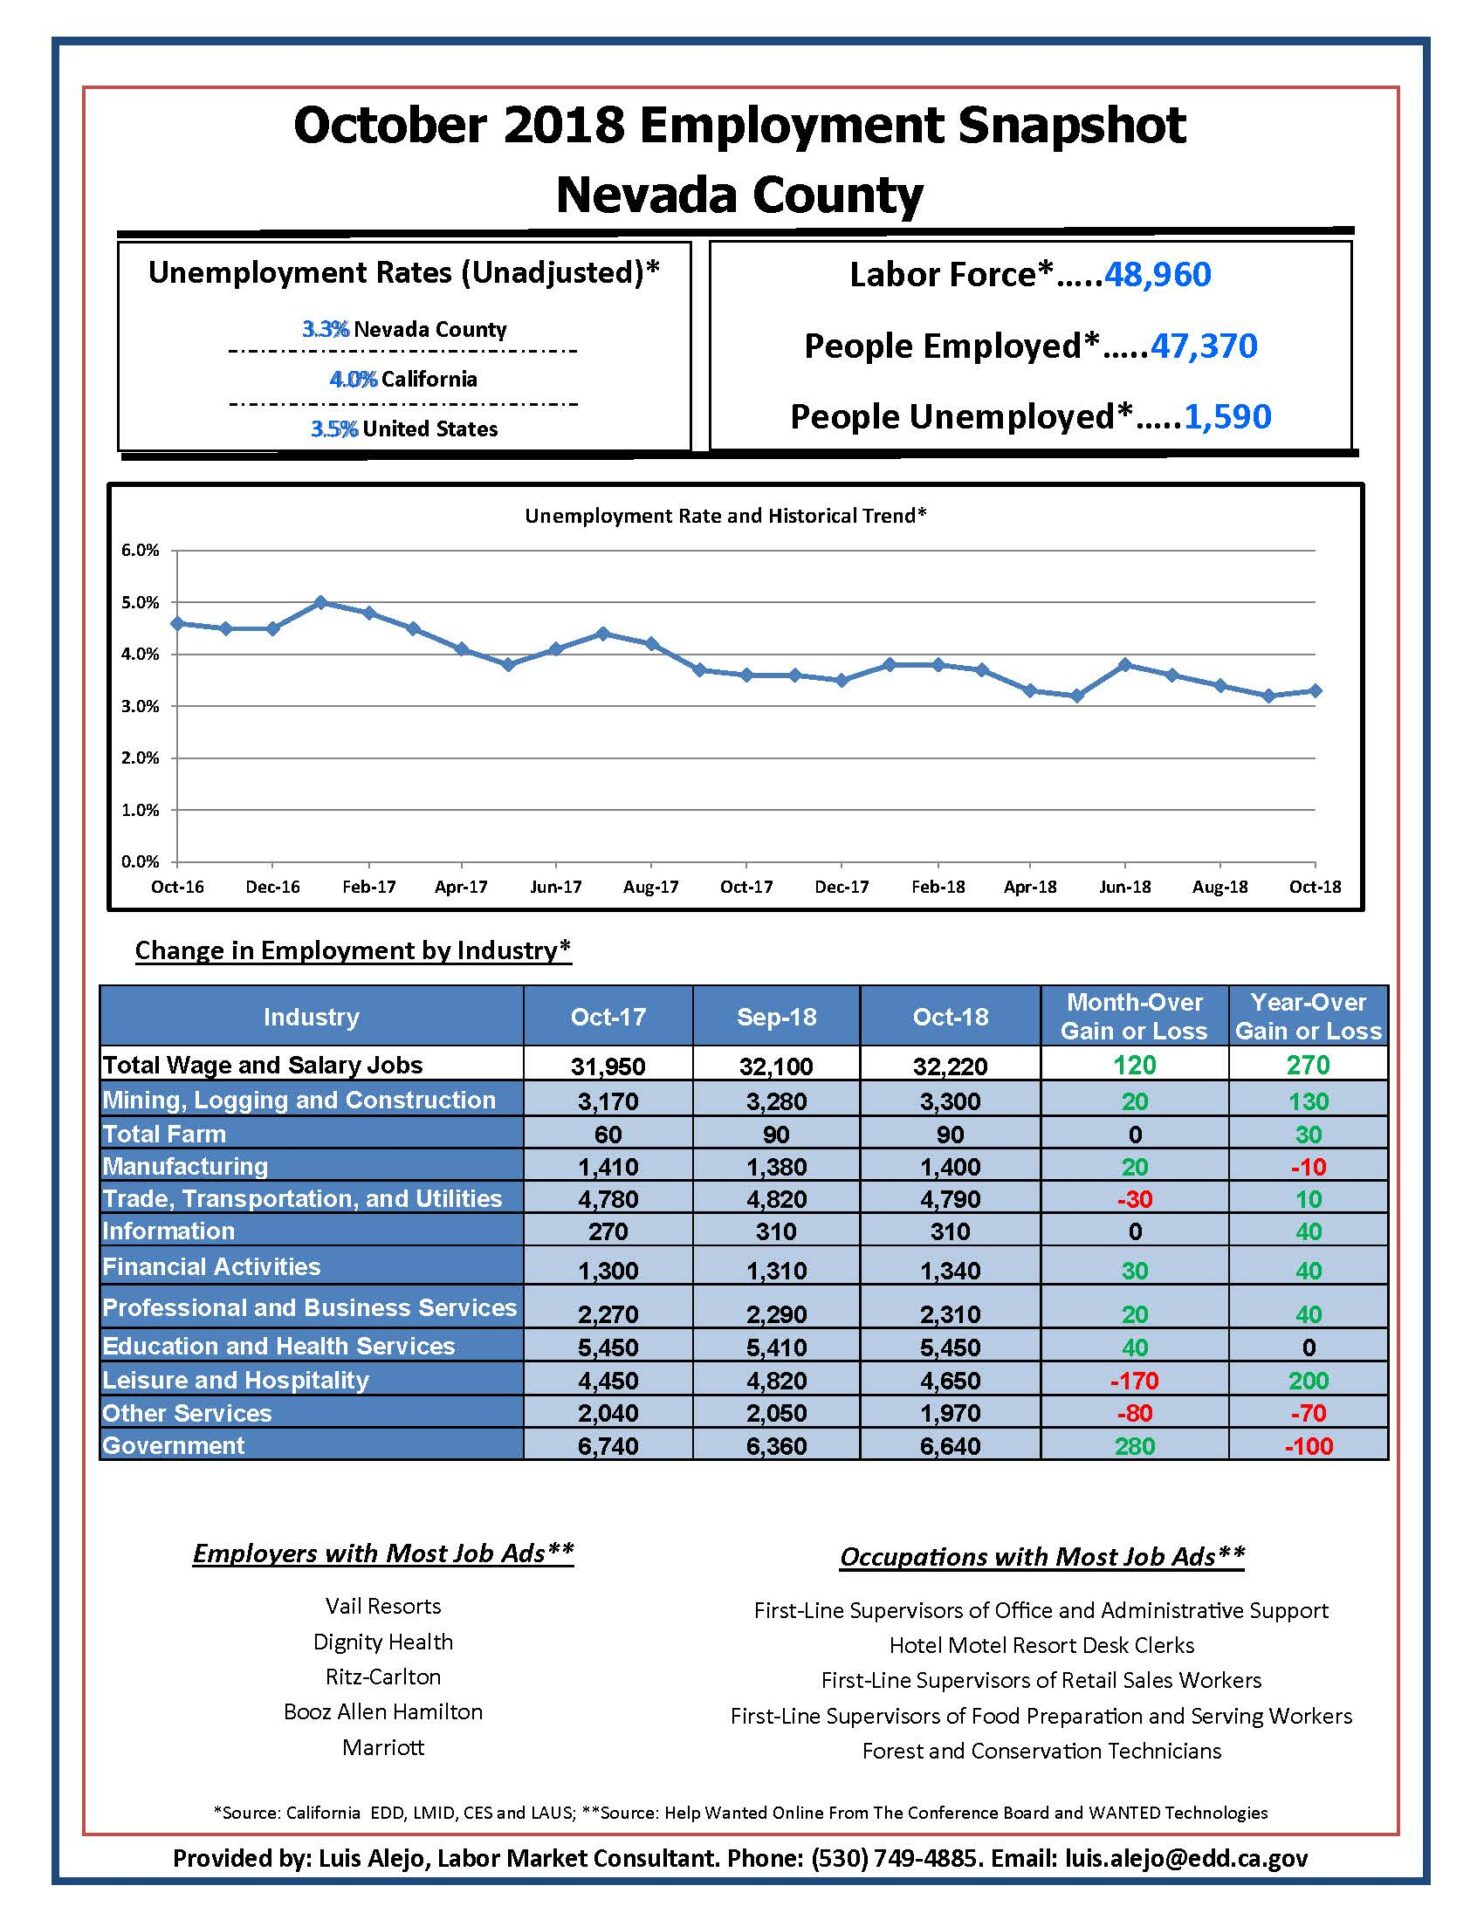 Nevada County Employment Snapshot October 2018 Numbers 1